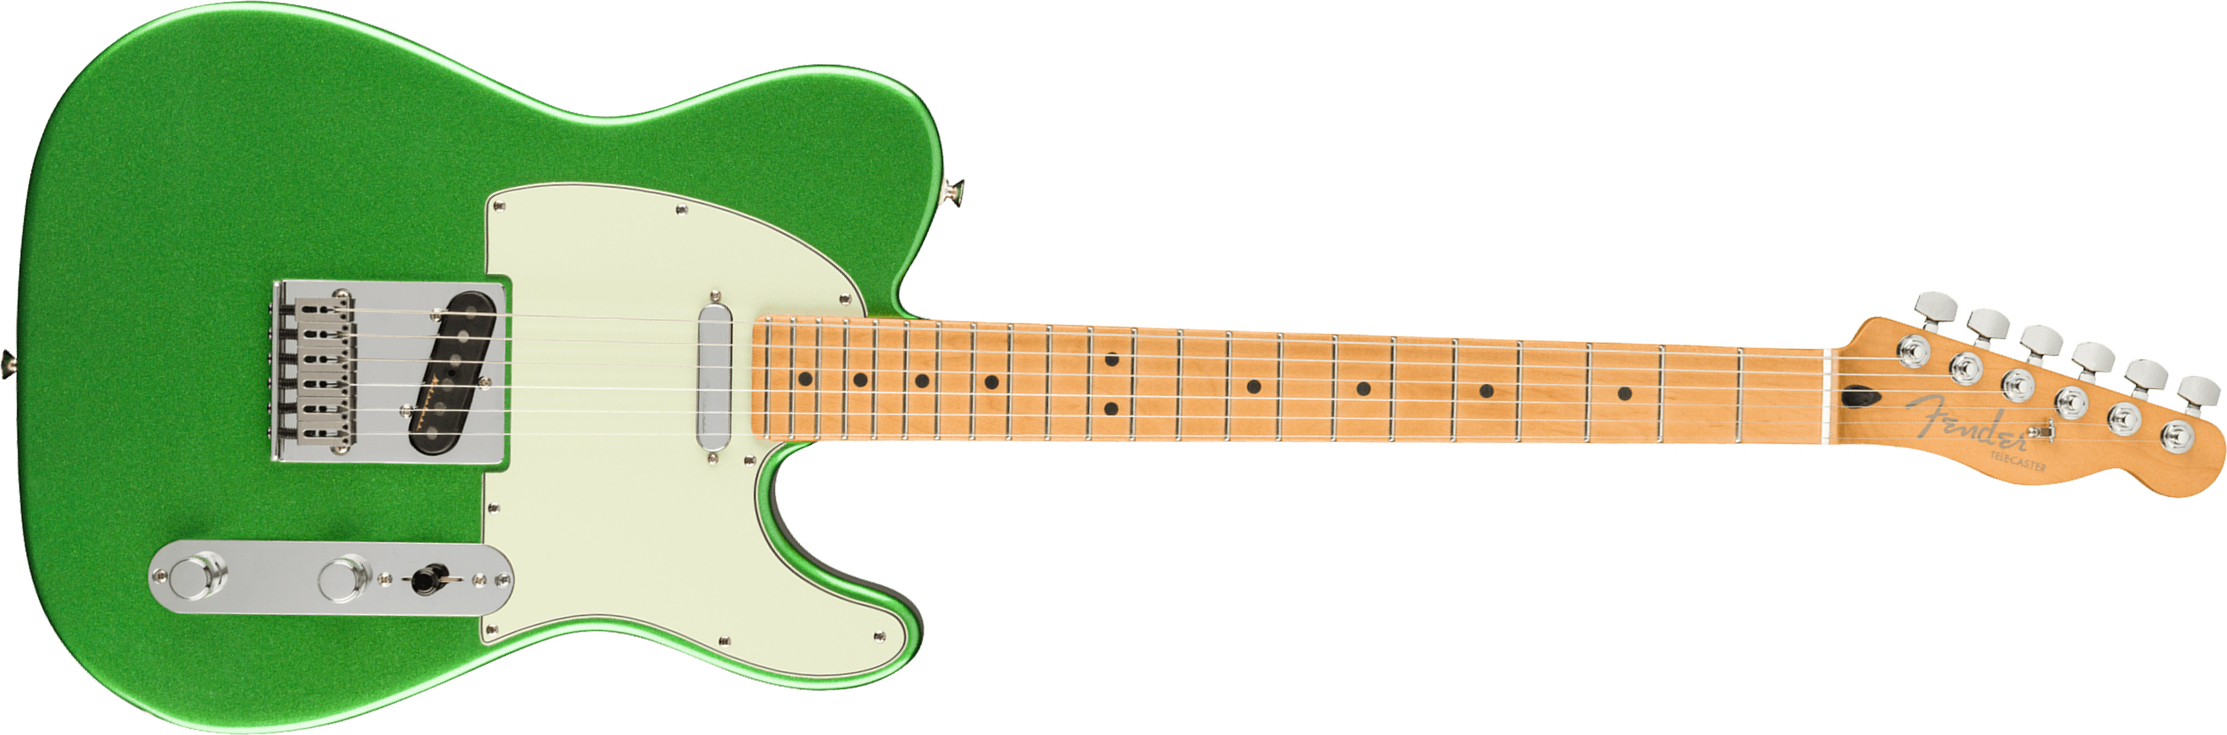 Fender Tele Player Plus Mex 2s Ht Mn - Cosmic Jade - Tel shape electric guitar - Main picture